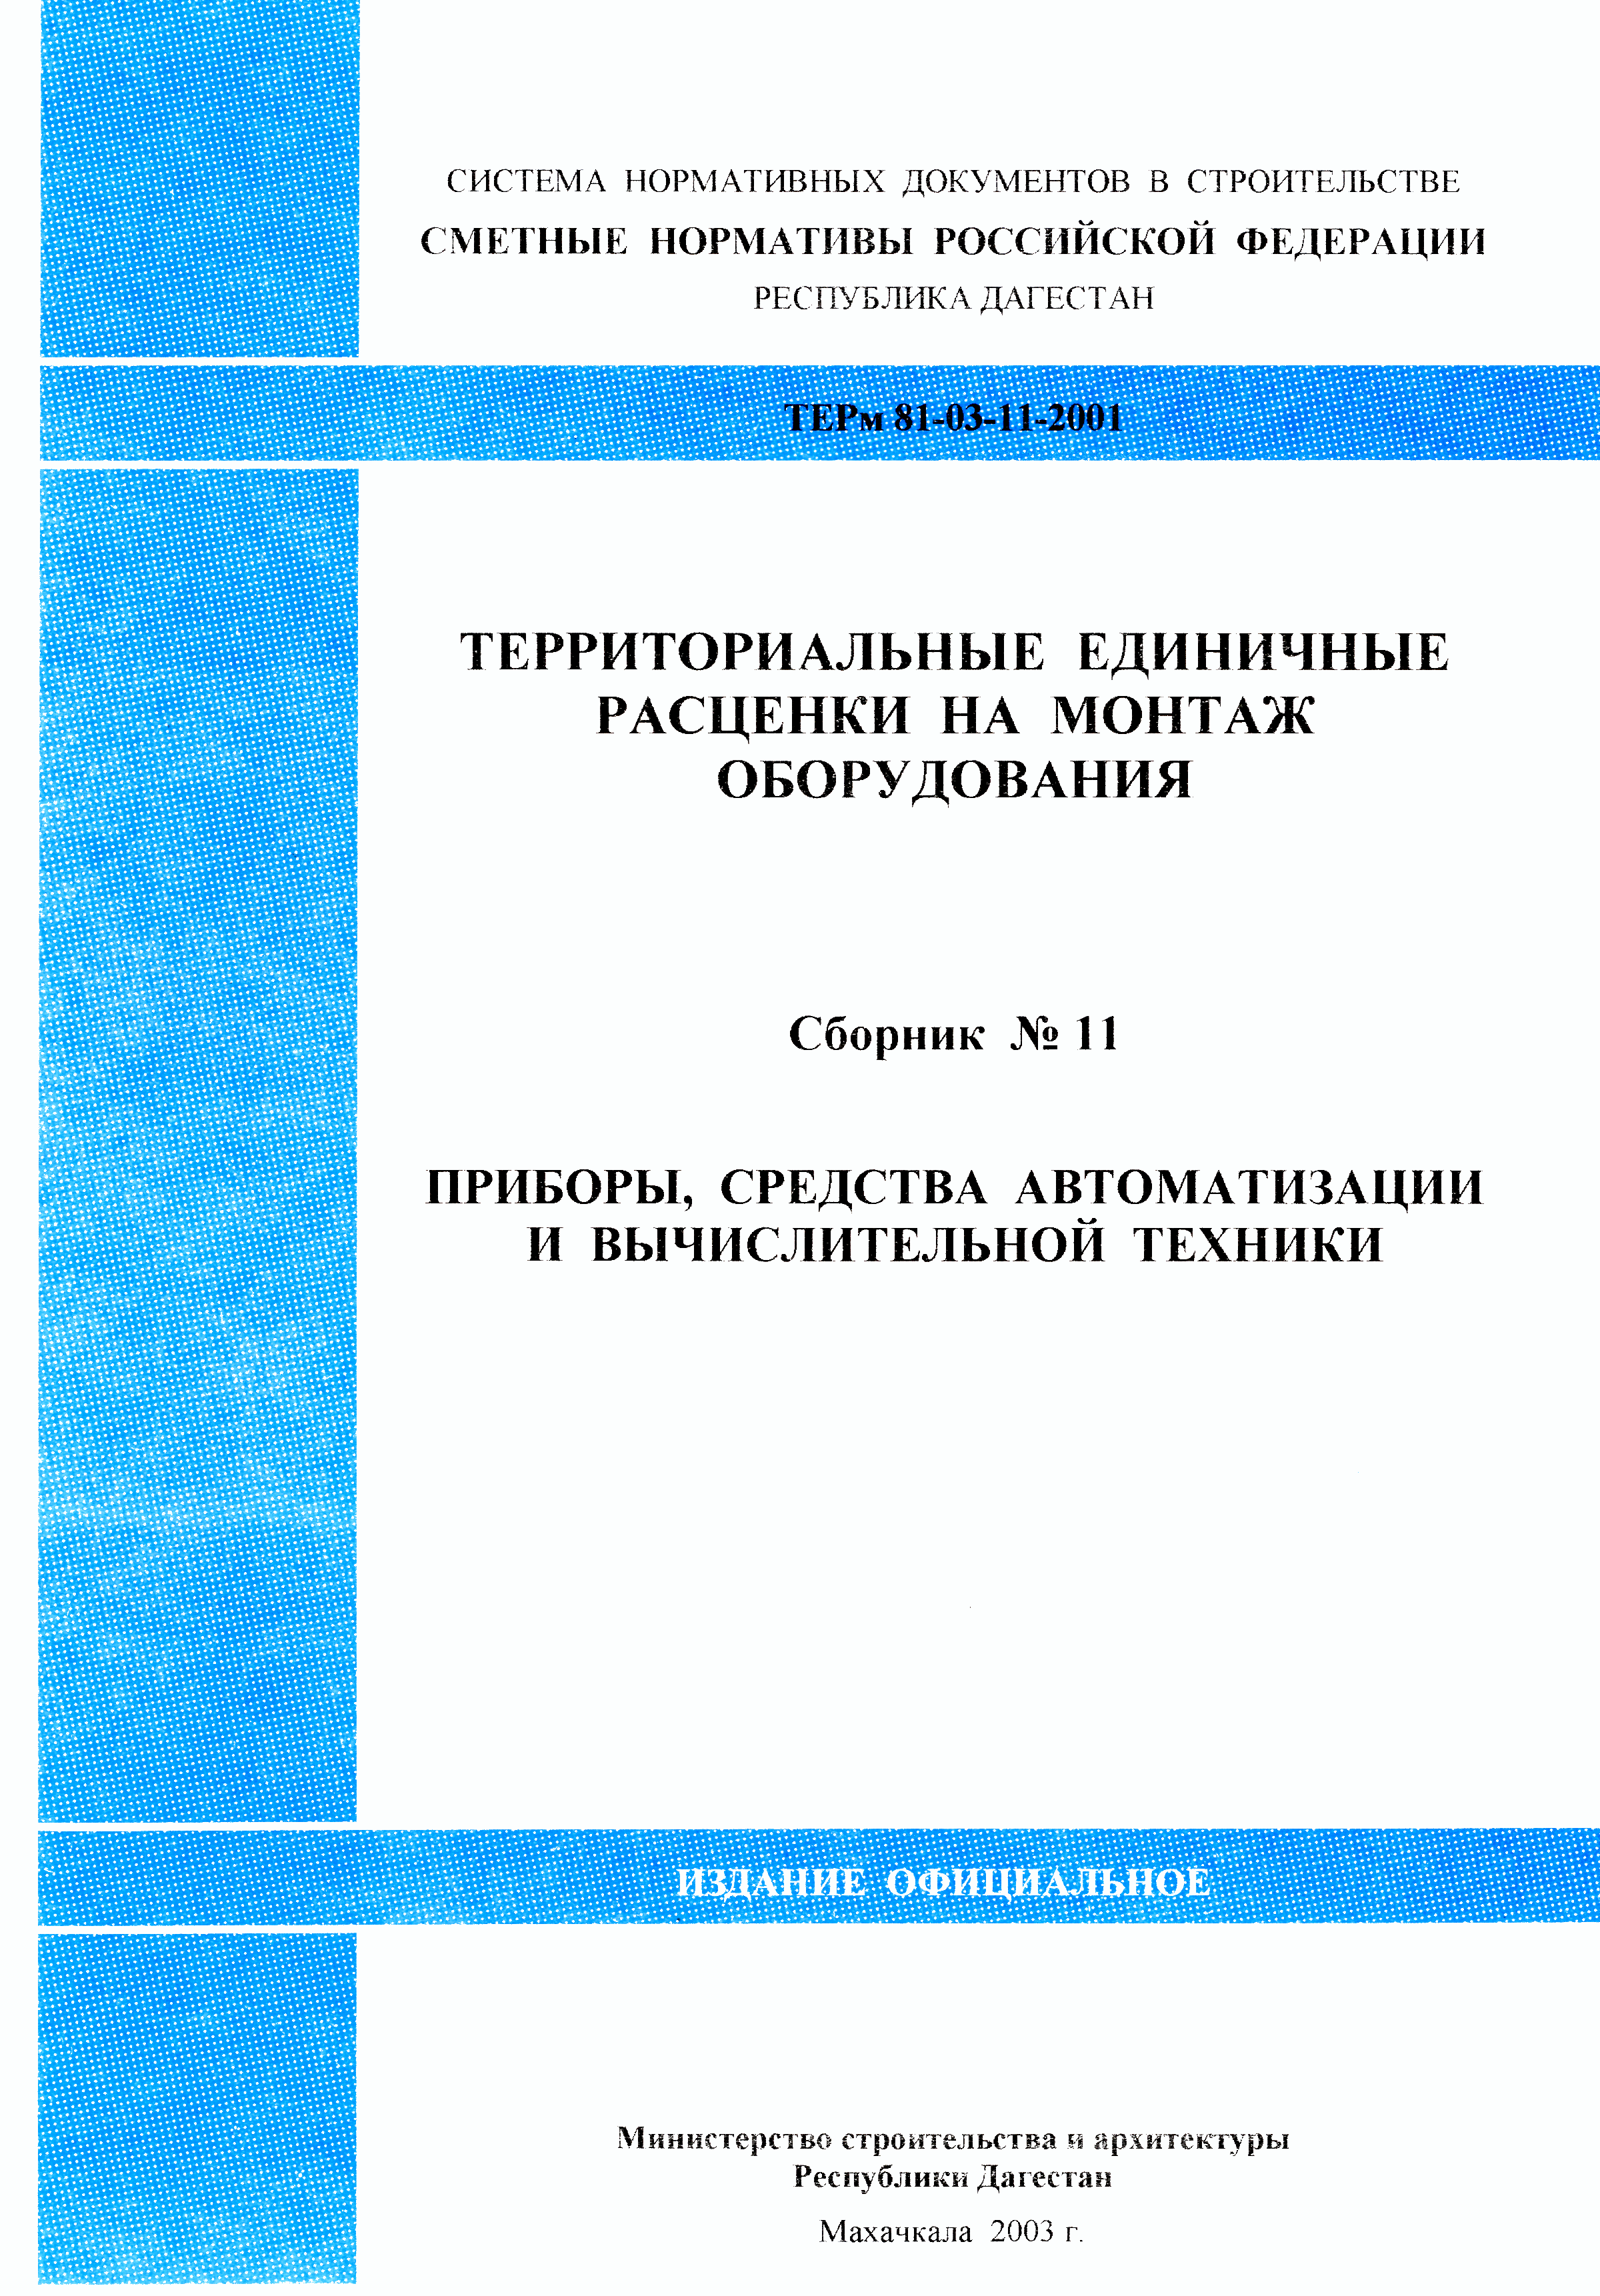 ТЕРм Республика Дагестан 2001-11